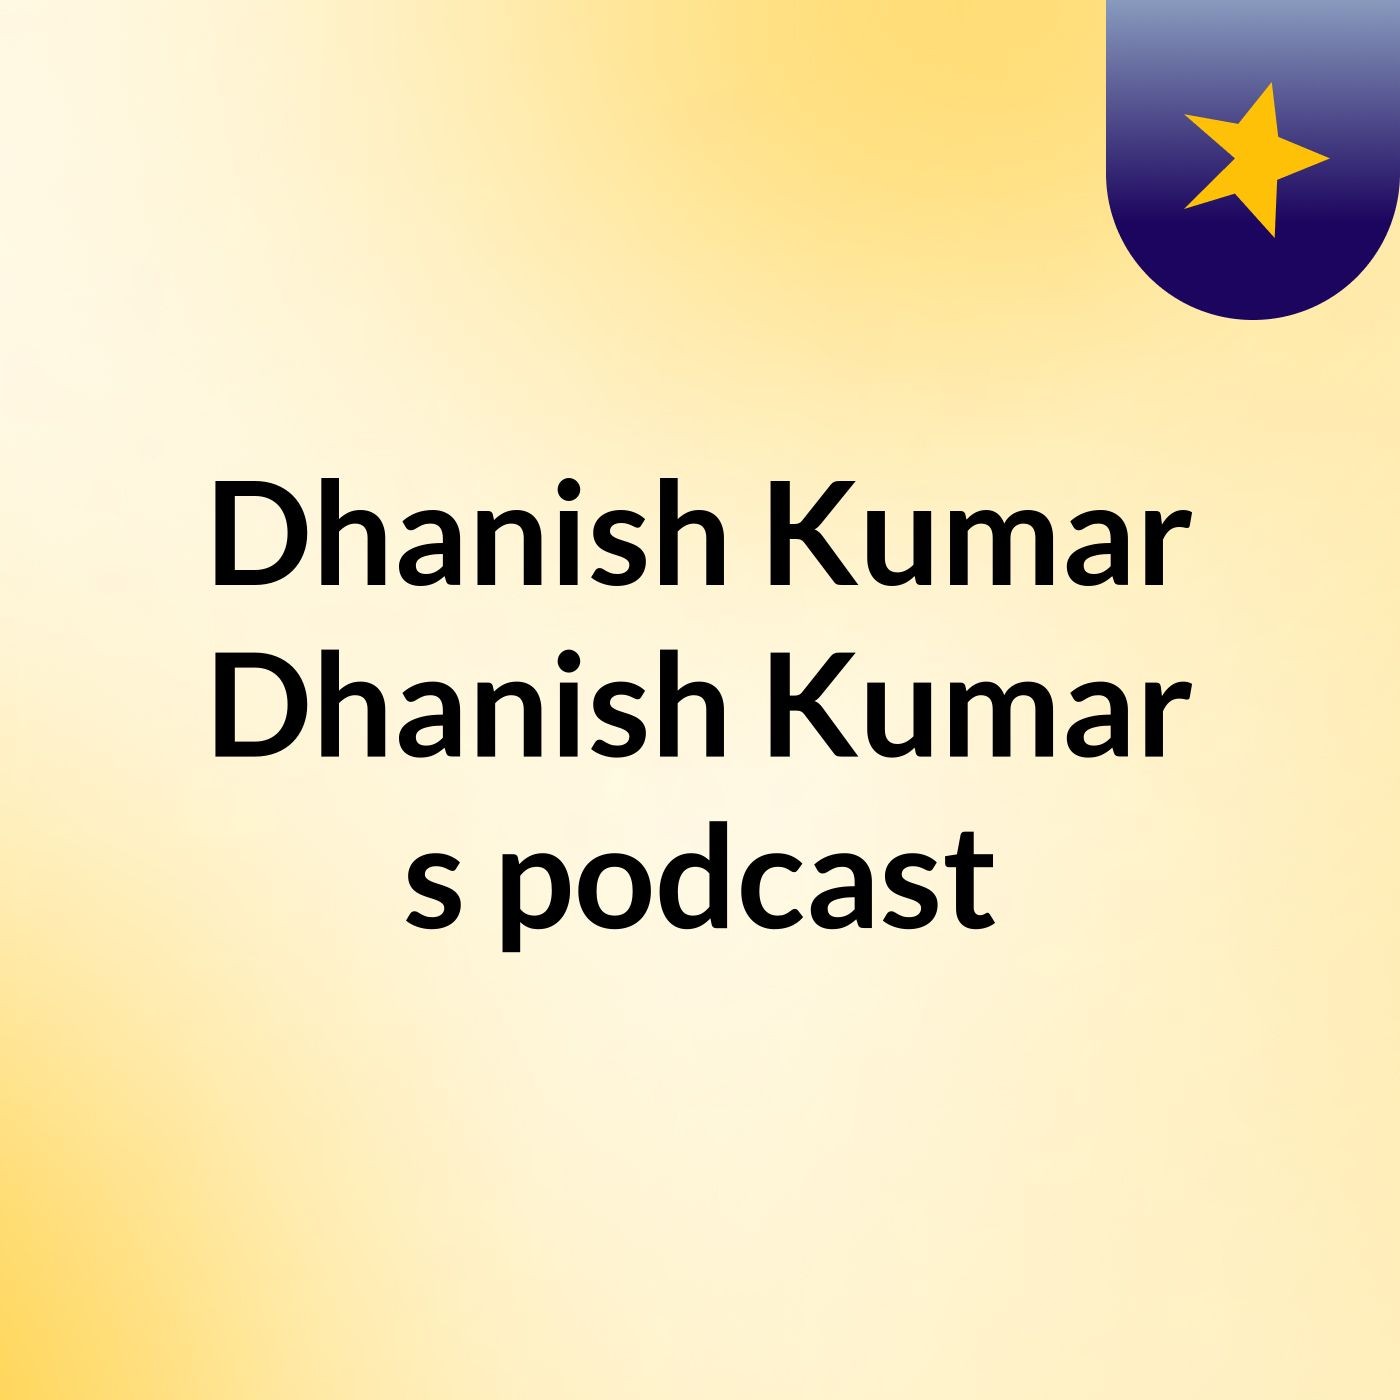 Episode 2 - Dhanish Kumar Dhanish Kumar's podcast